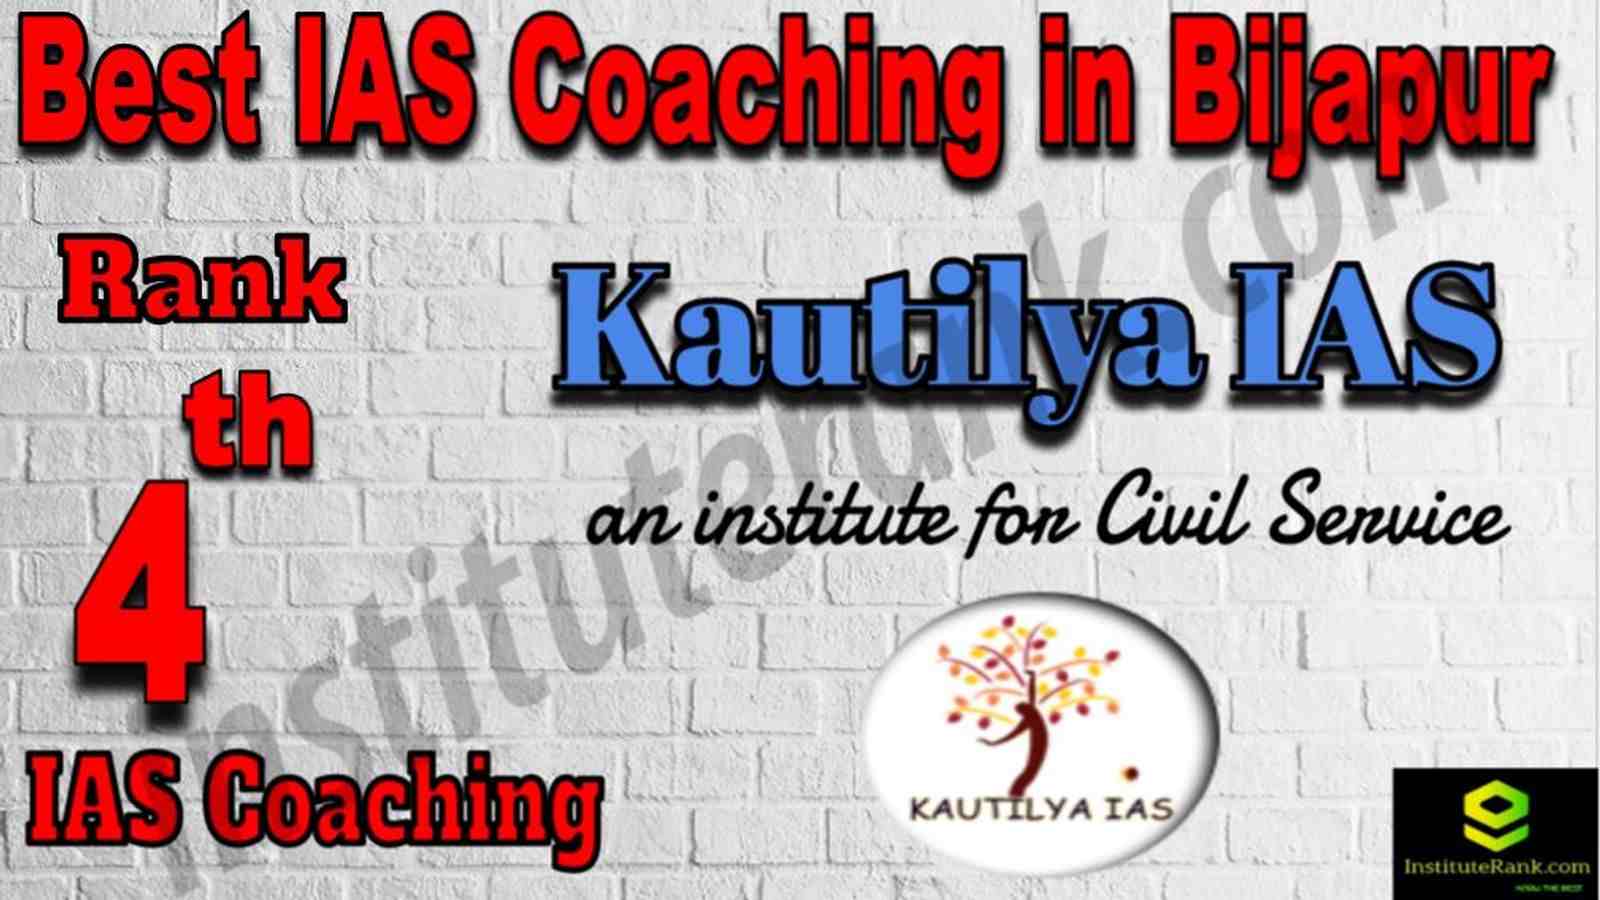 4th Best IAS Coaching in Bijapur